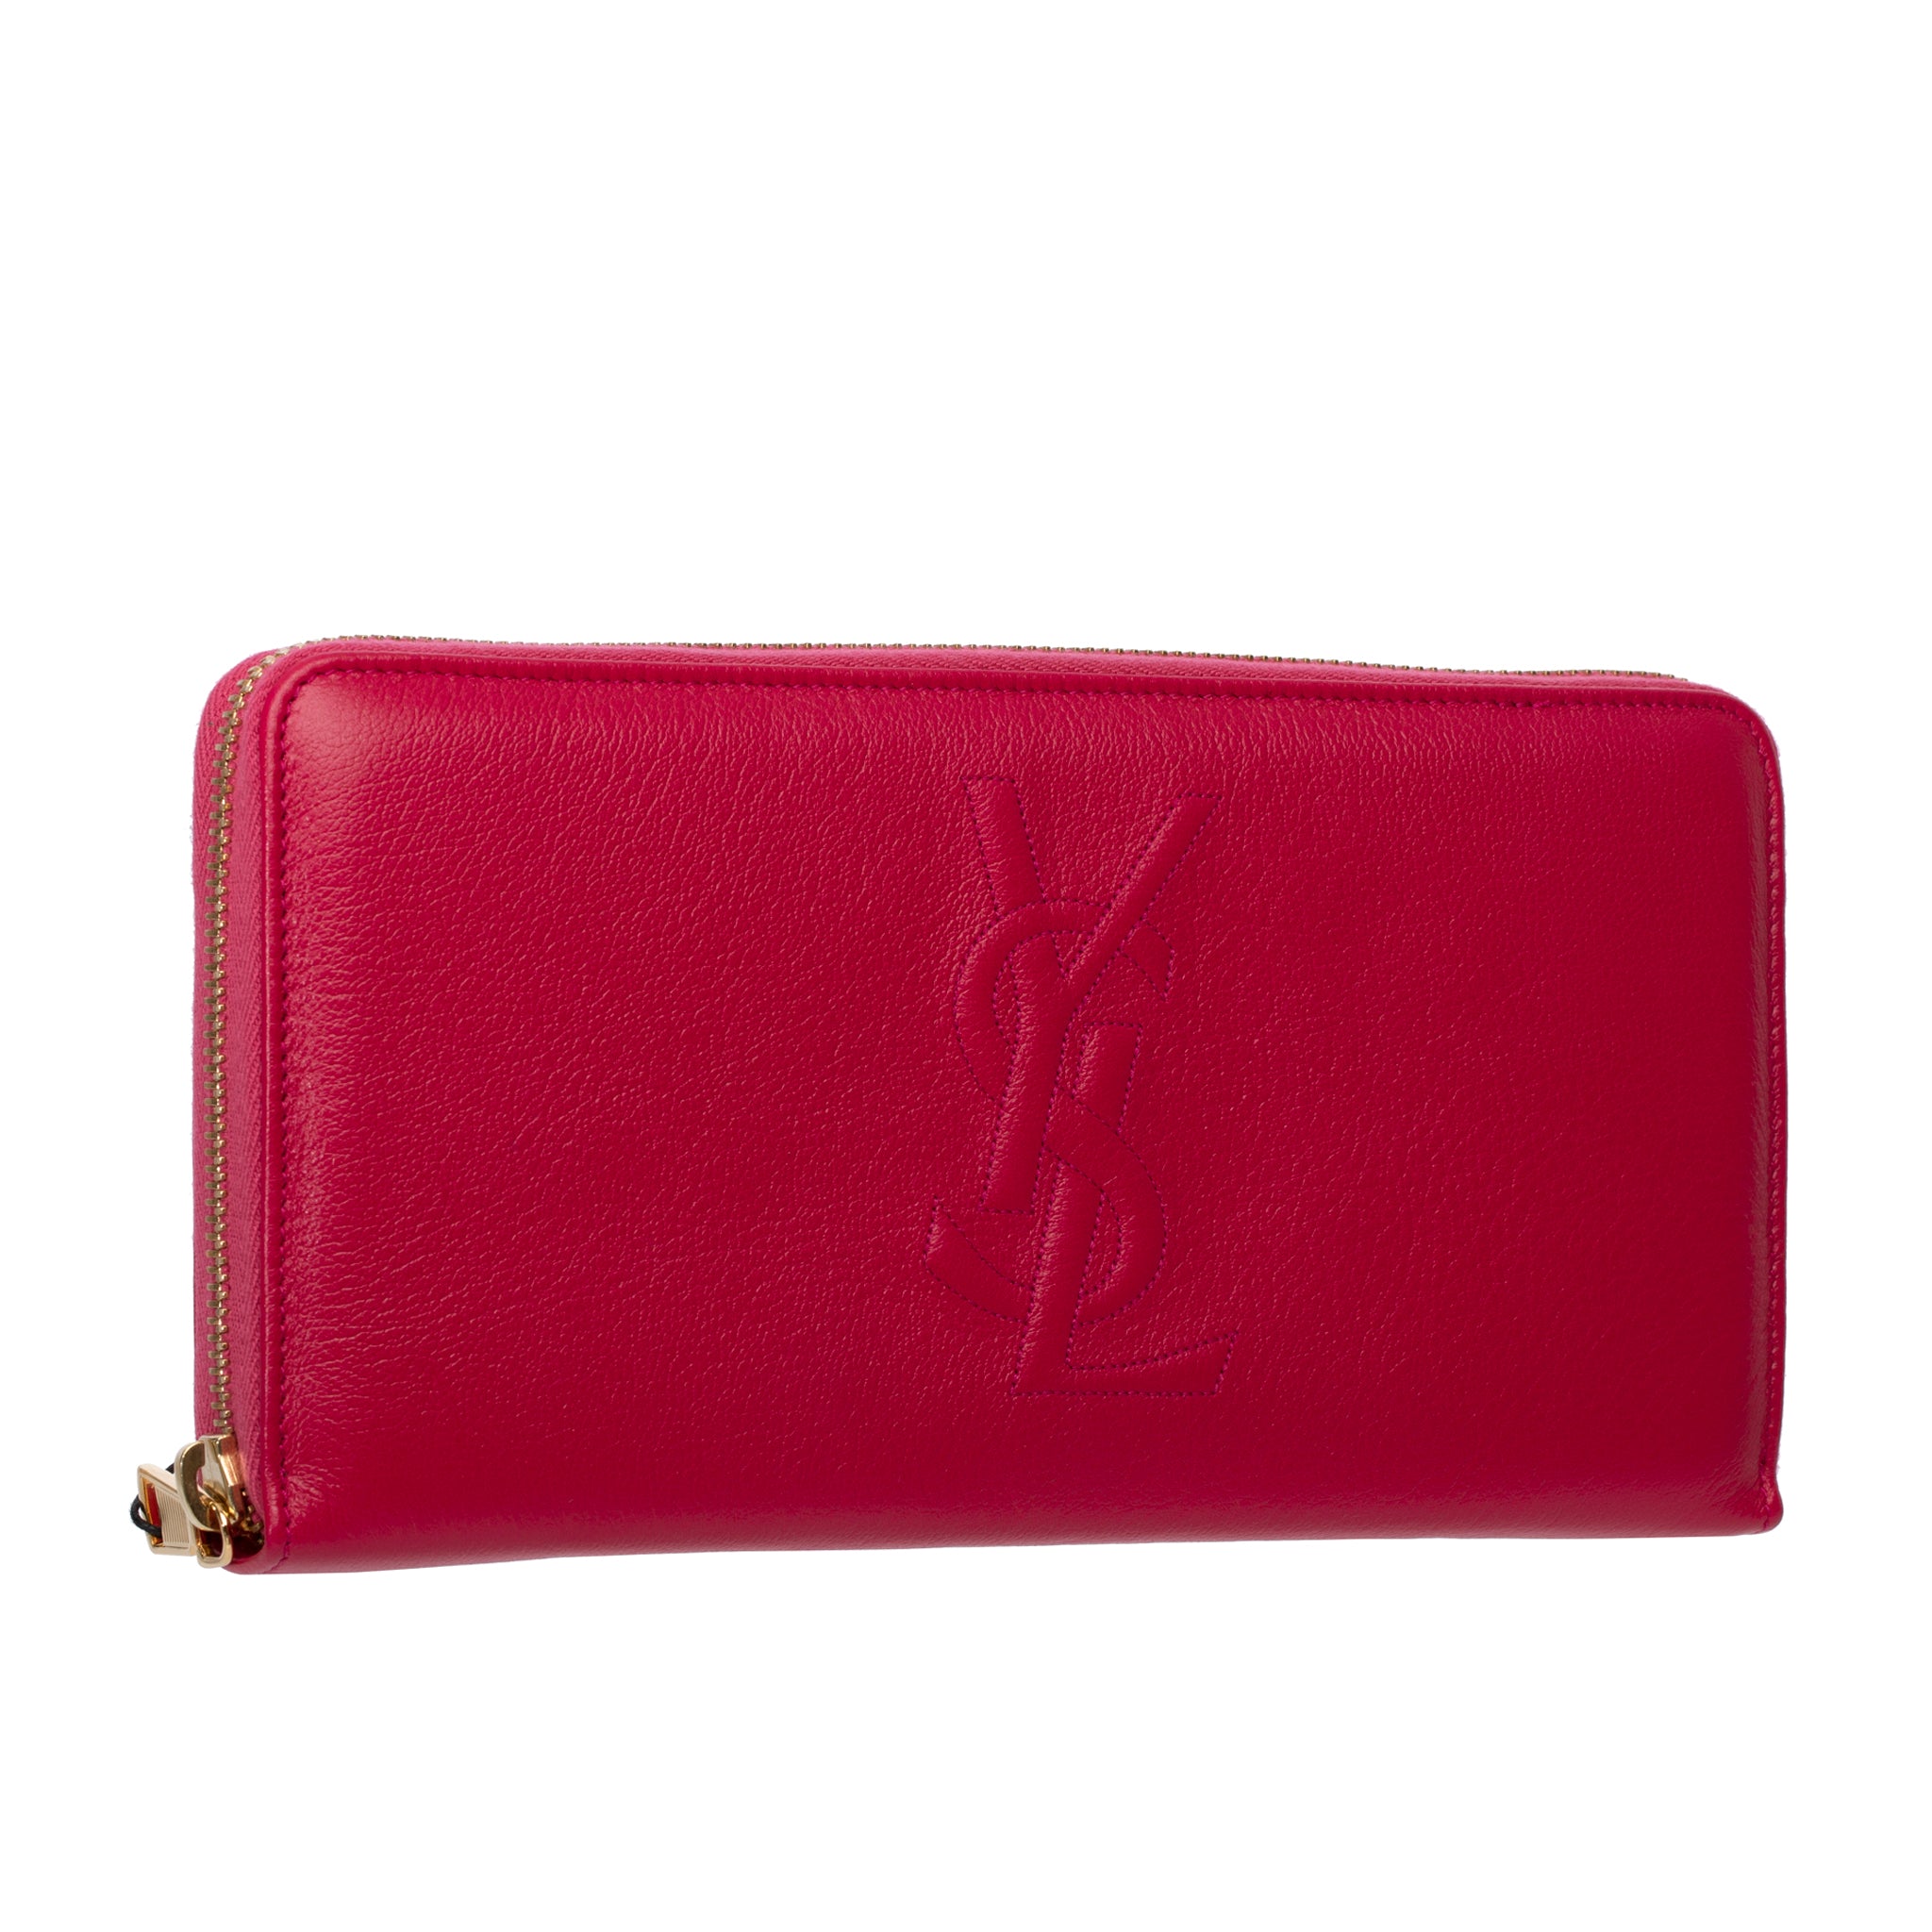 Yves Saint Laurent Pink Leather Wallet